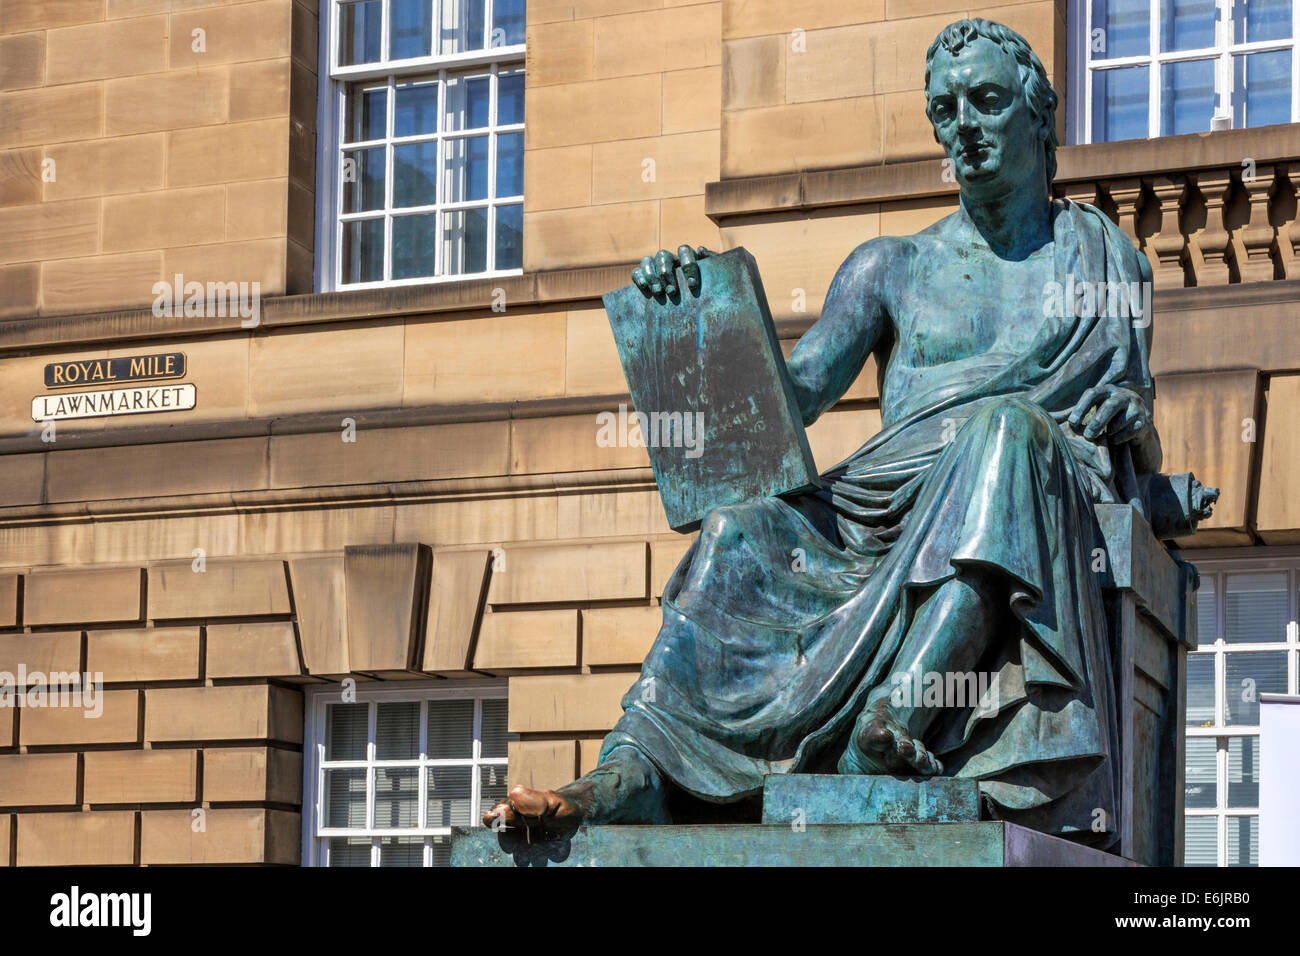 Statue of David Hume, Scottish philosopher, born 1711, died 1776, in the Royal Mile, Edinburgh, Scotland, UK Stock Photo